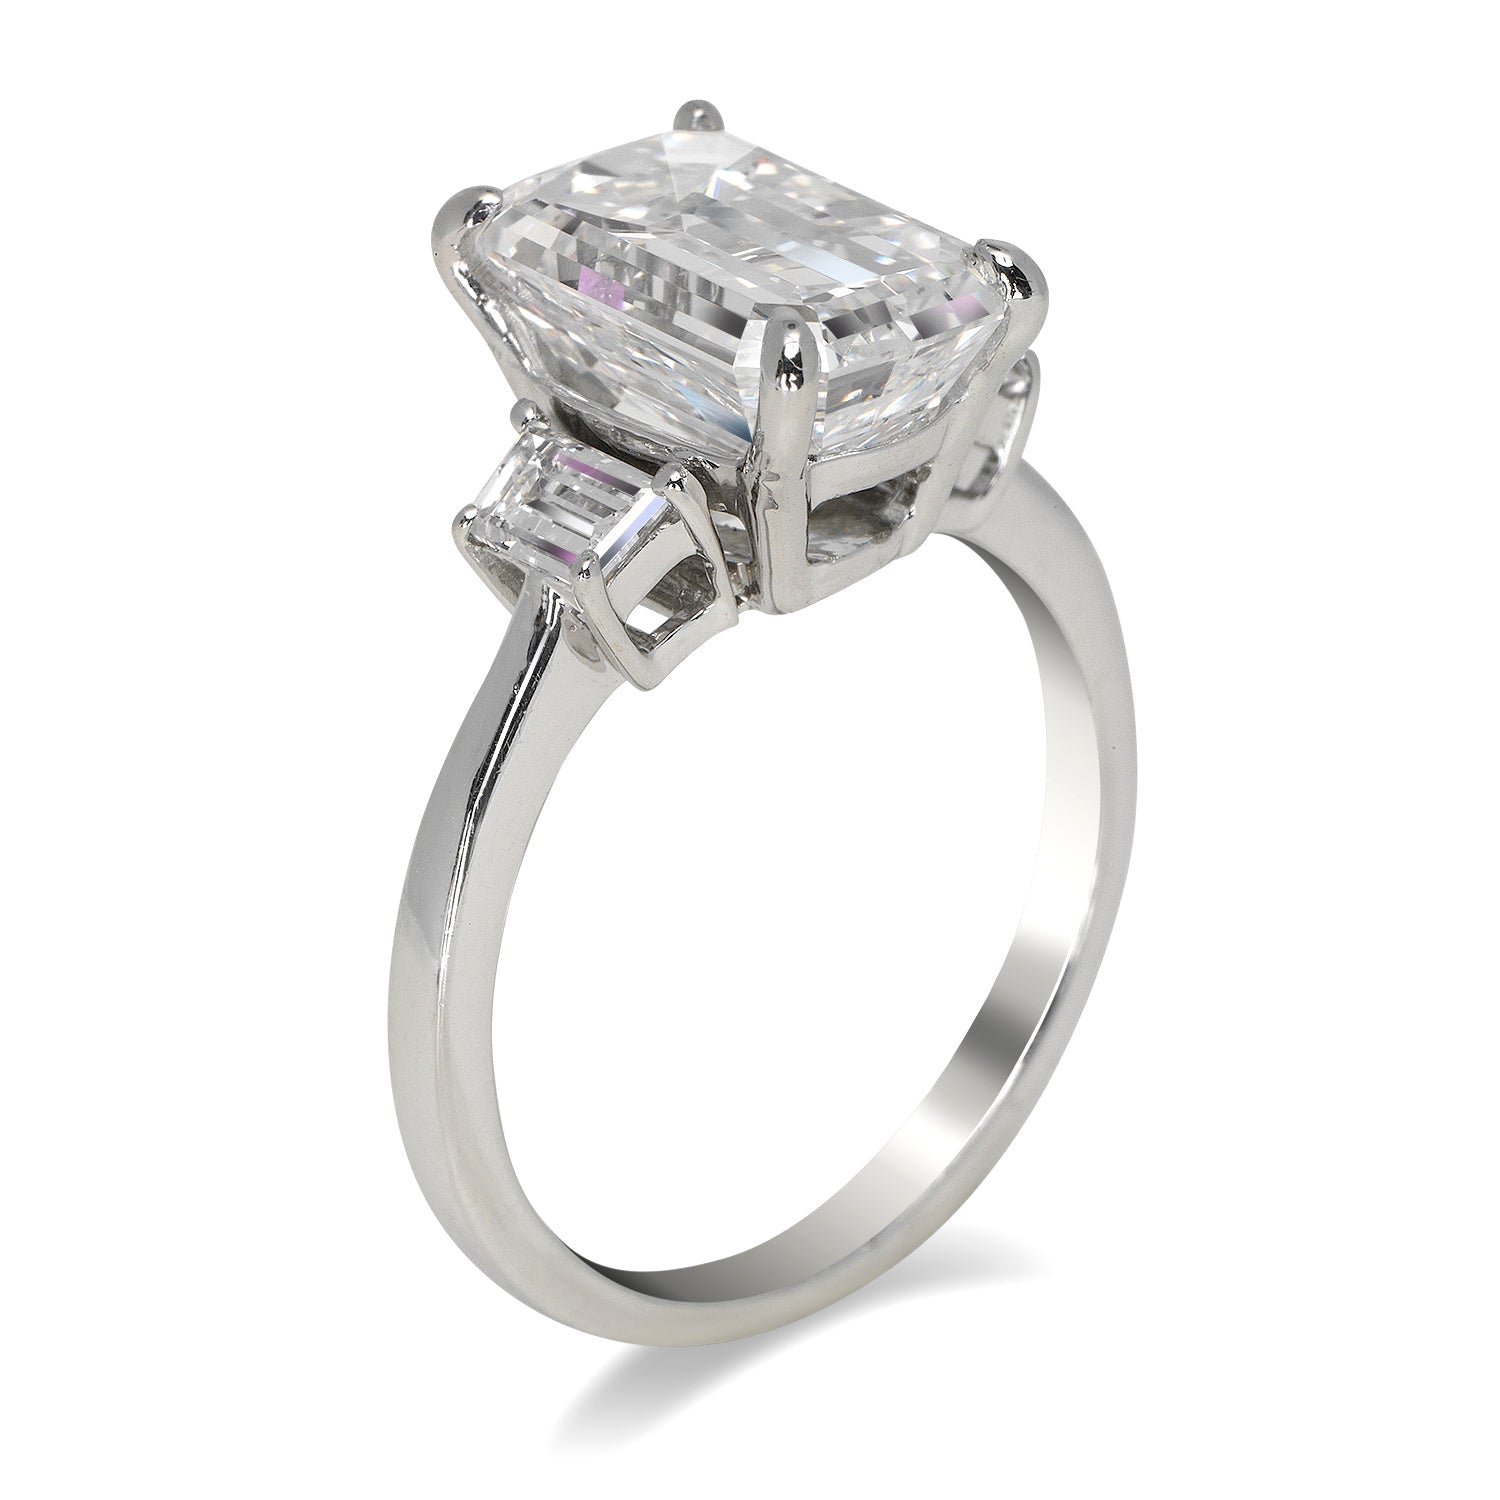 3 Carat Diamond Engagement Rings: Natural vs Lab Grown?